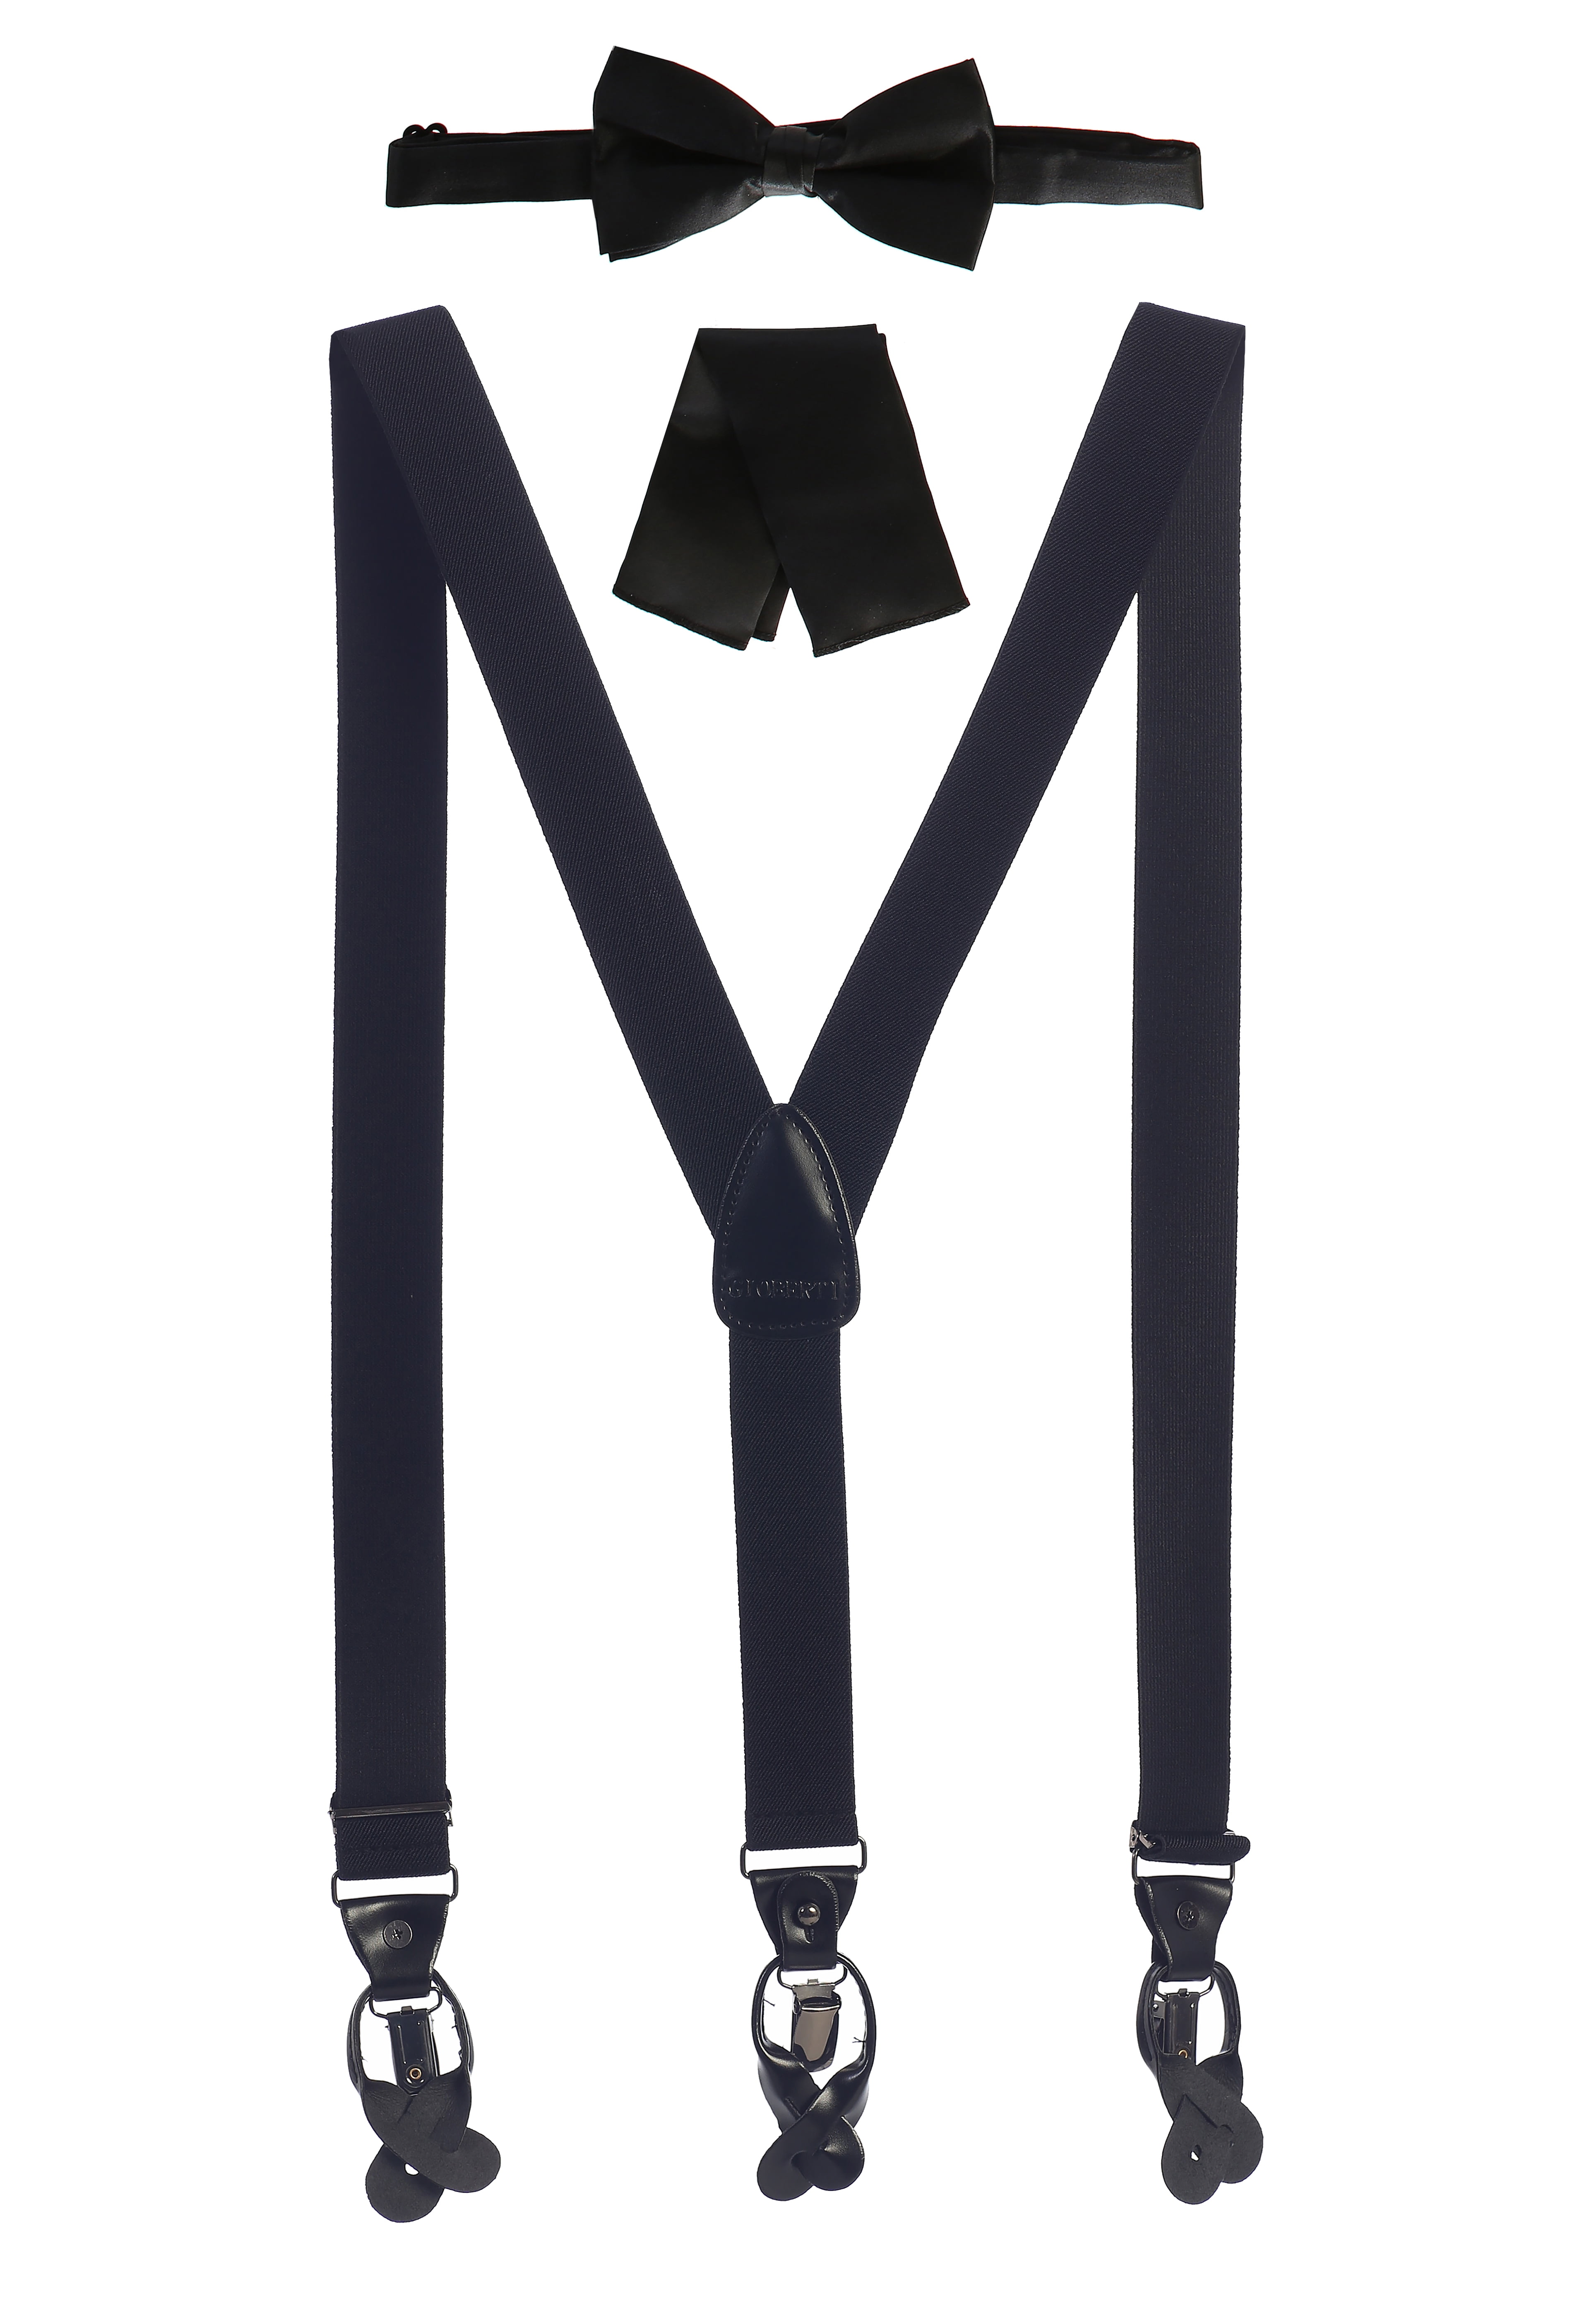 Bow Tie Gioberti Boys Convertible Suspenders and Hanky Set 